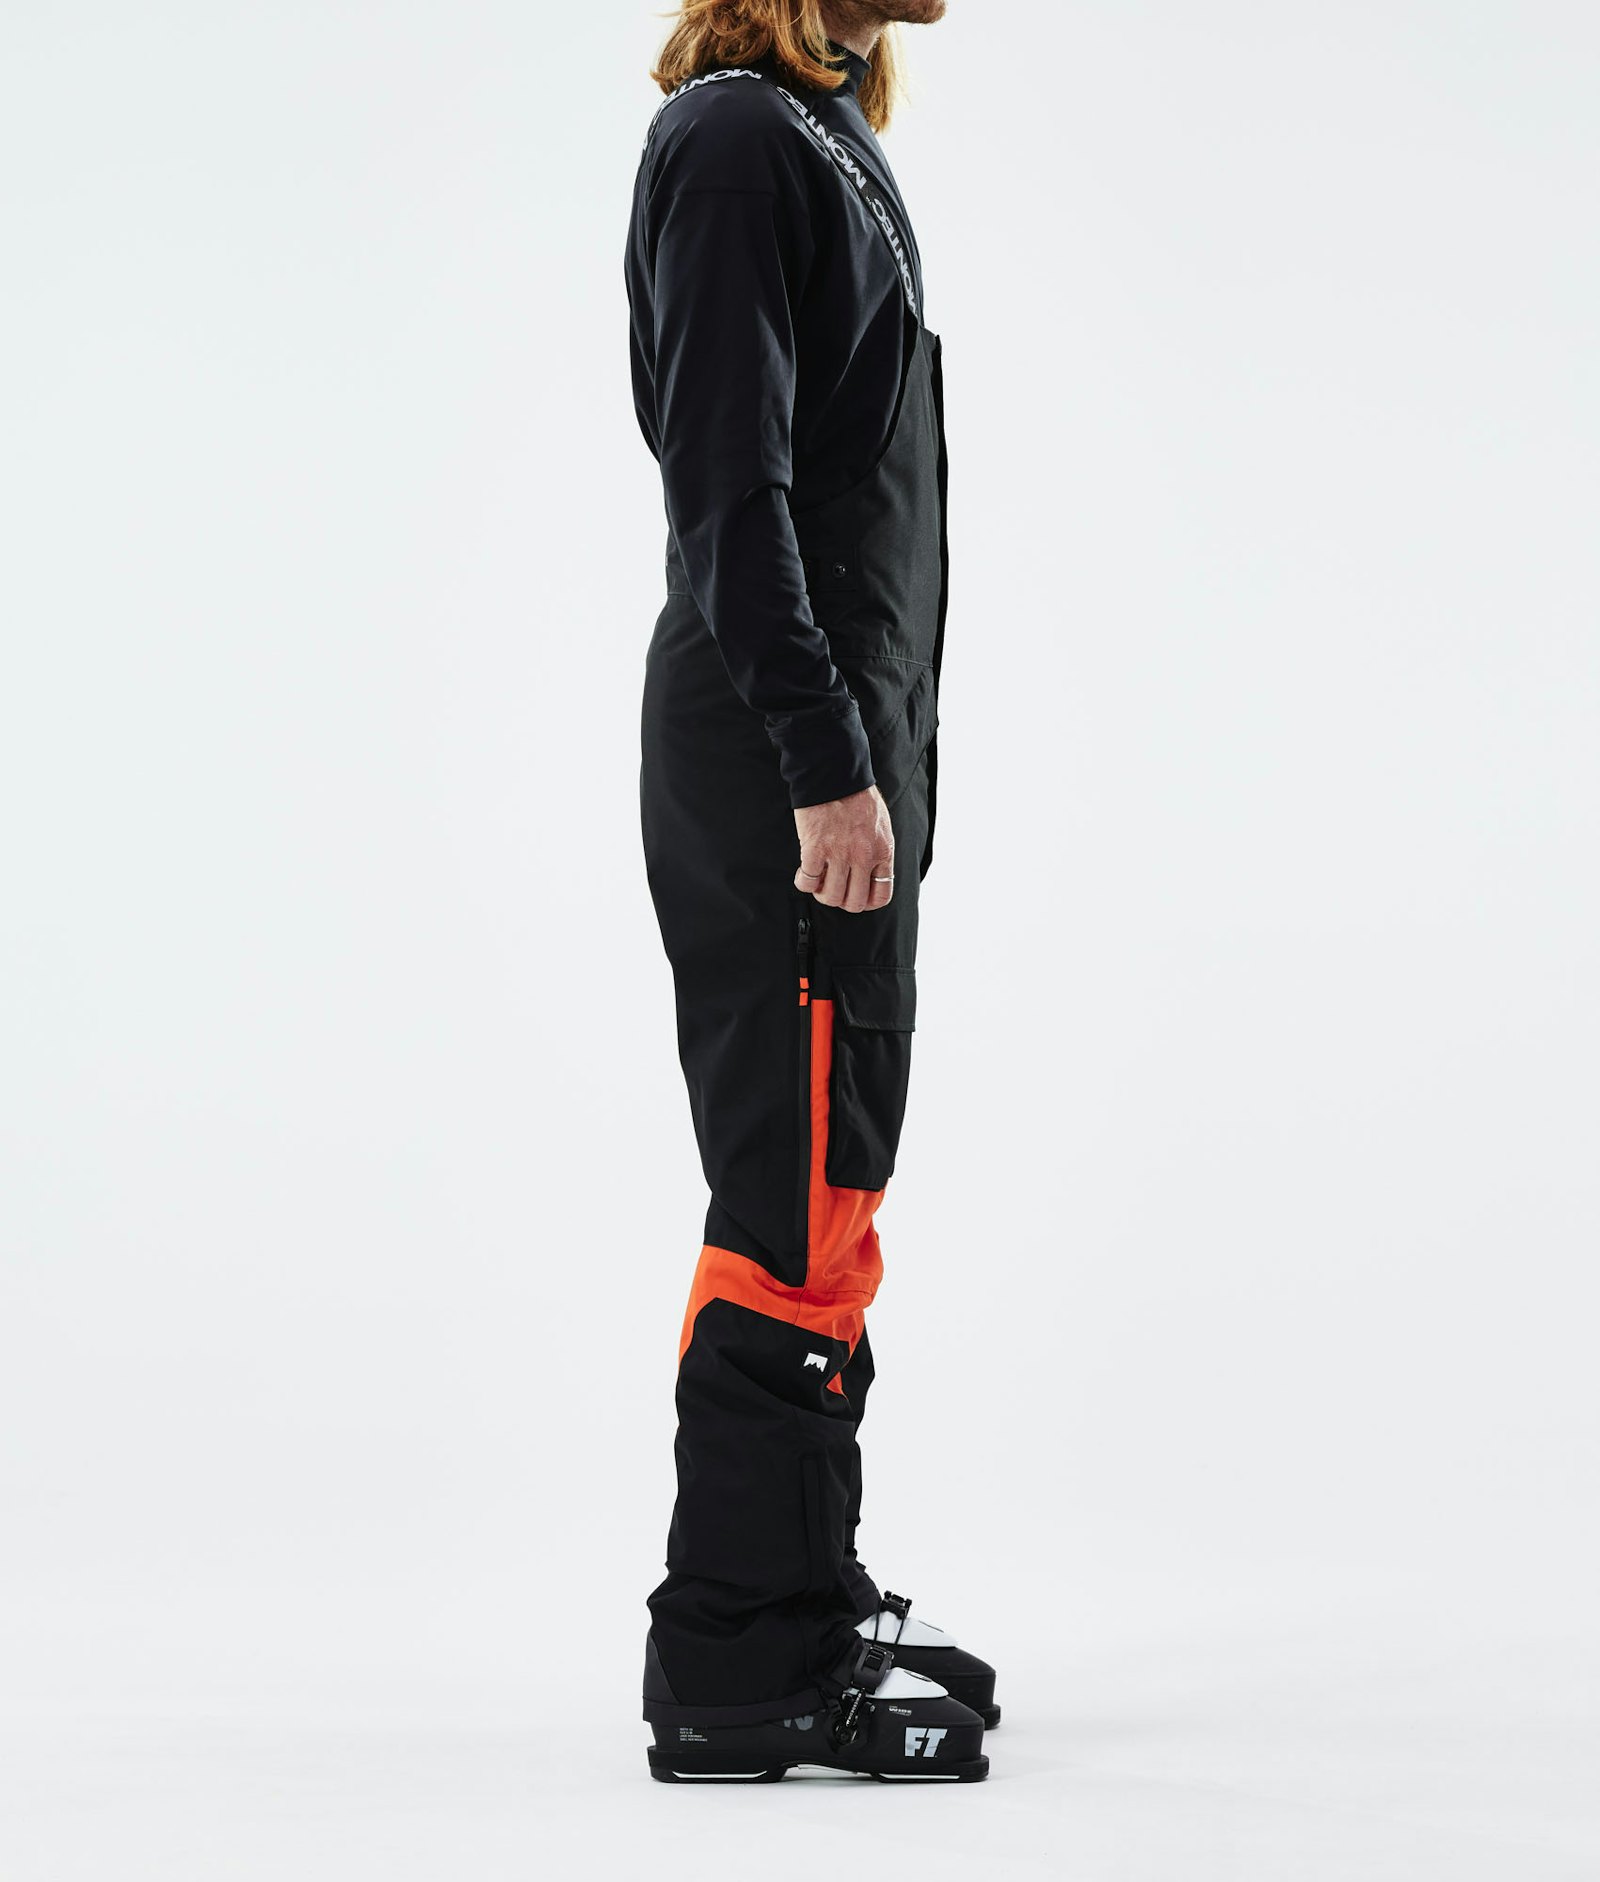 Fawk 2021 スキーパンツ メンズ Black/Orange